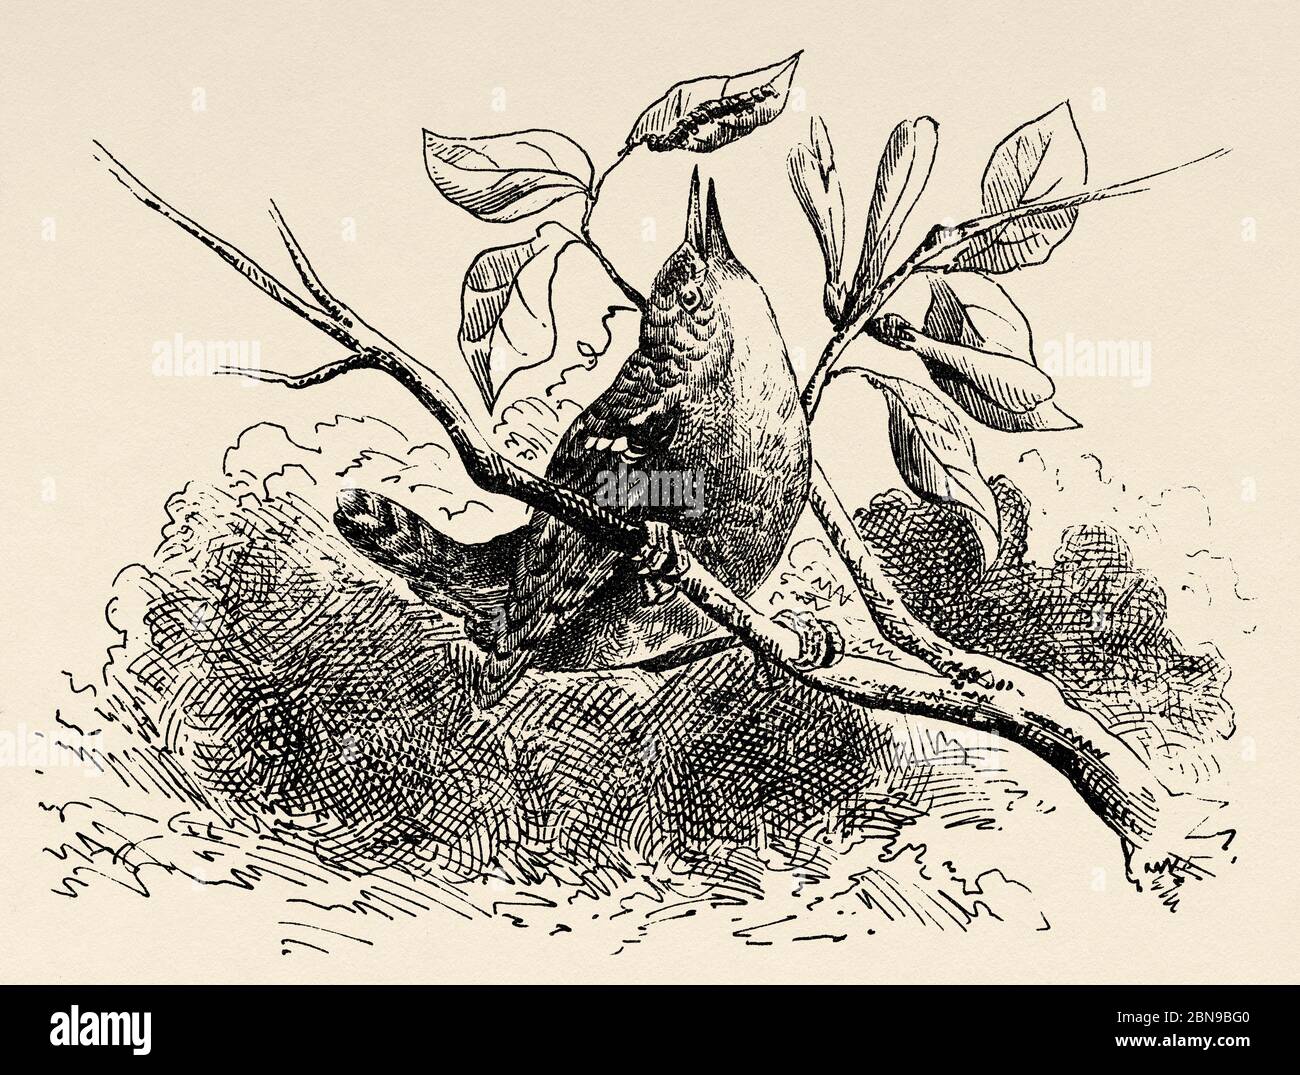 Der Singlekinglet (Regulus regulus) ist der kleinste Singvögel Europas. Alte gravierte Tier Illustration 19. Jahrhundert Stockfoto